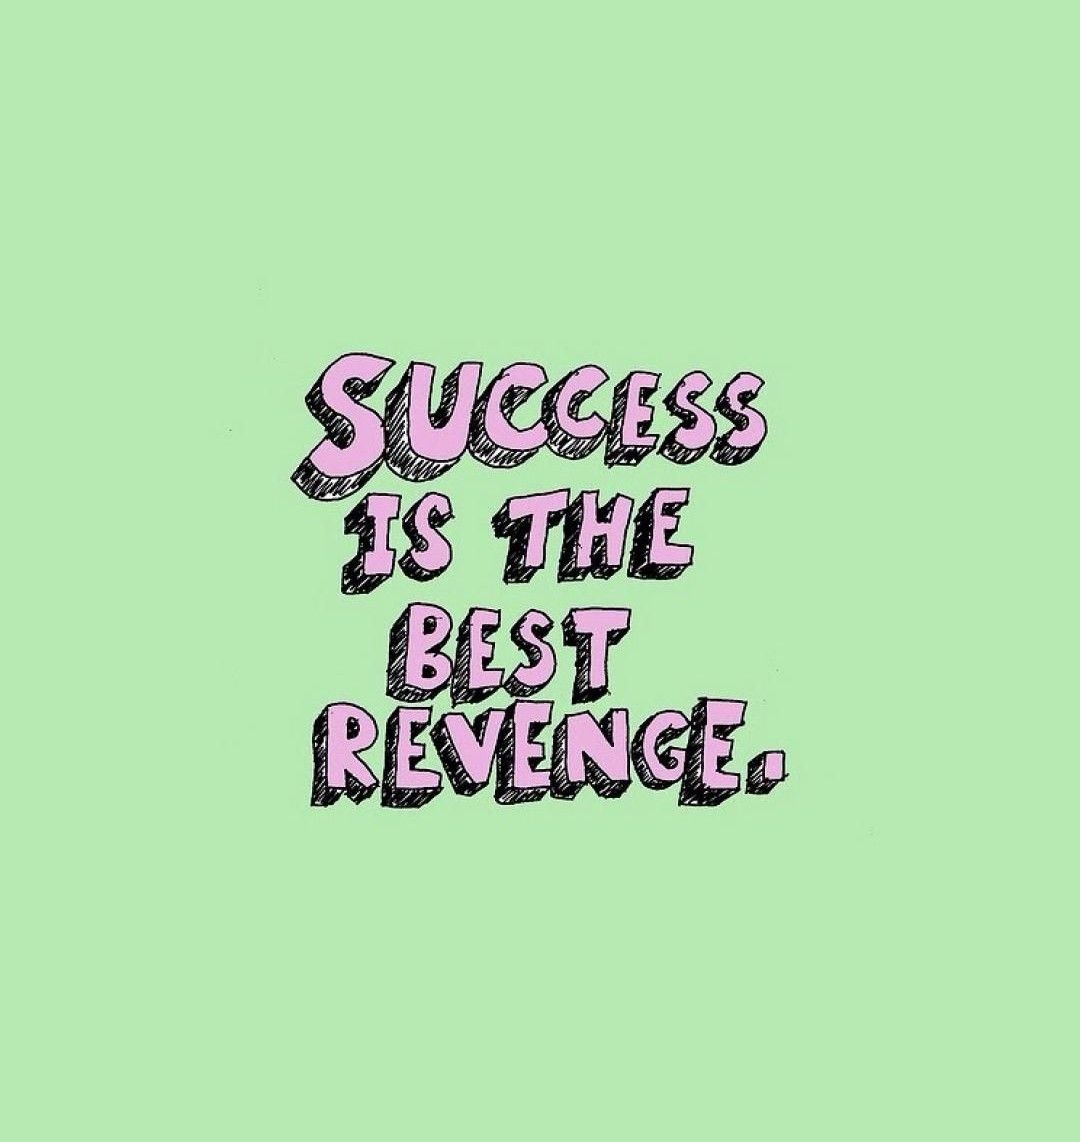 Success is the best revenge